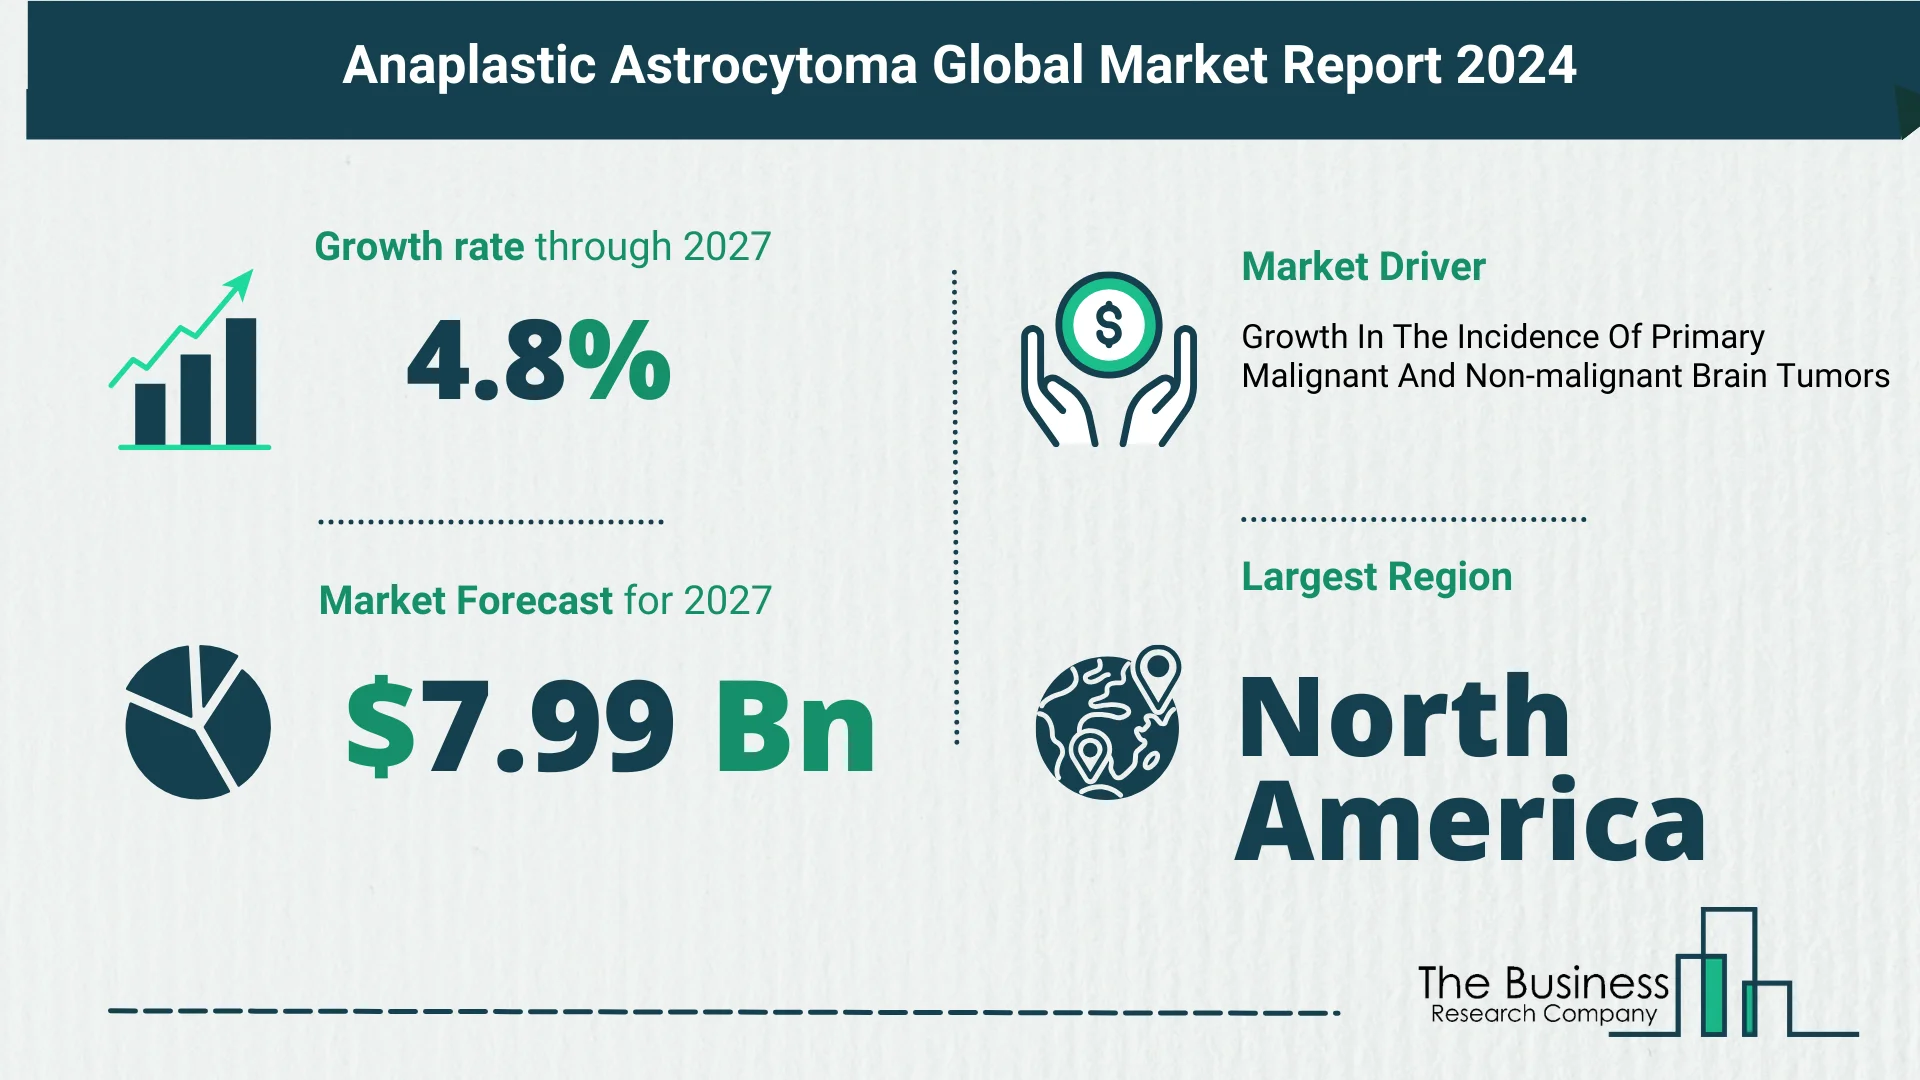 Global Anaplastic Astrocytoma Market Size